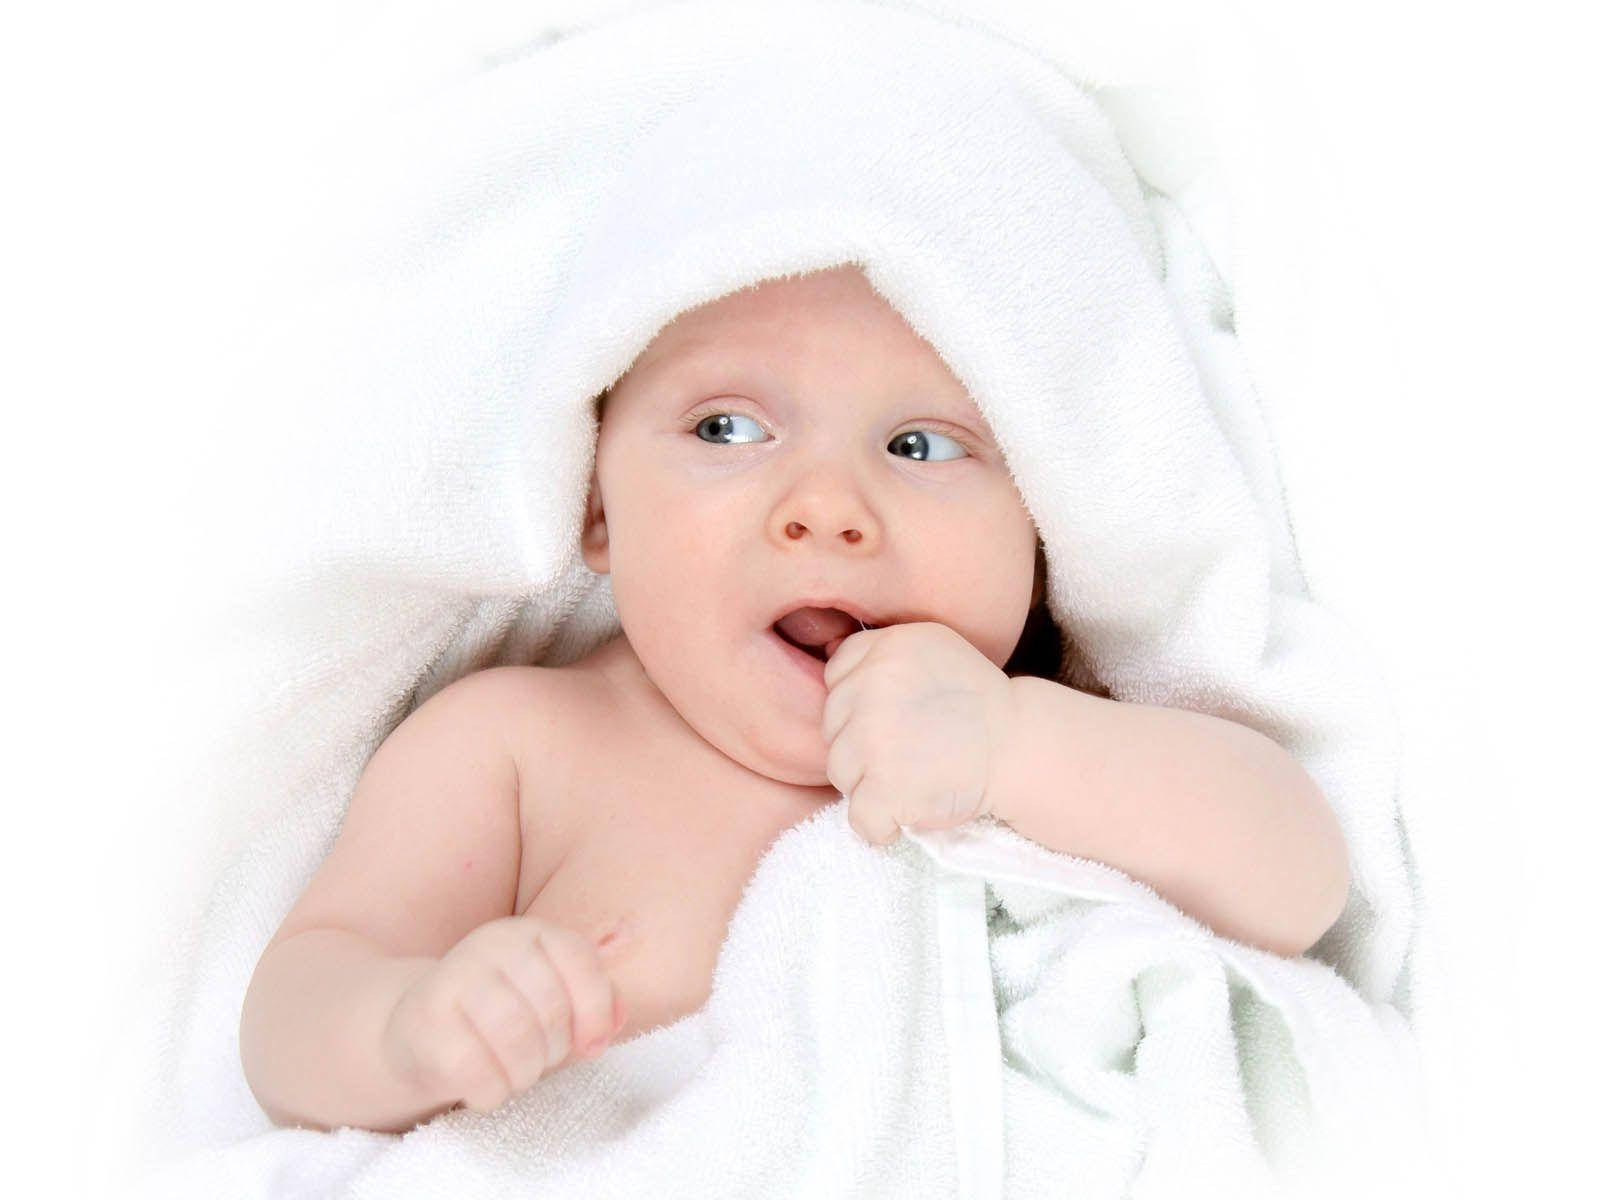 Innocence Expressed - Adorable Newborn Close-up Wallpaper